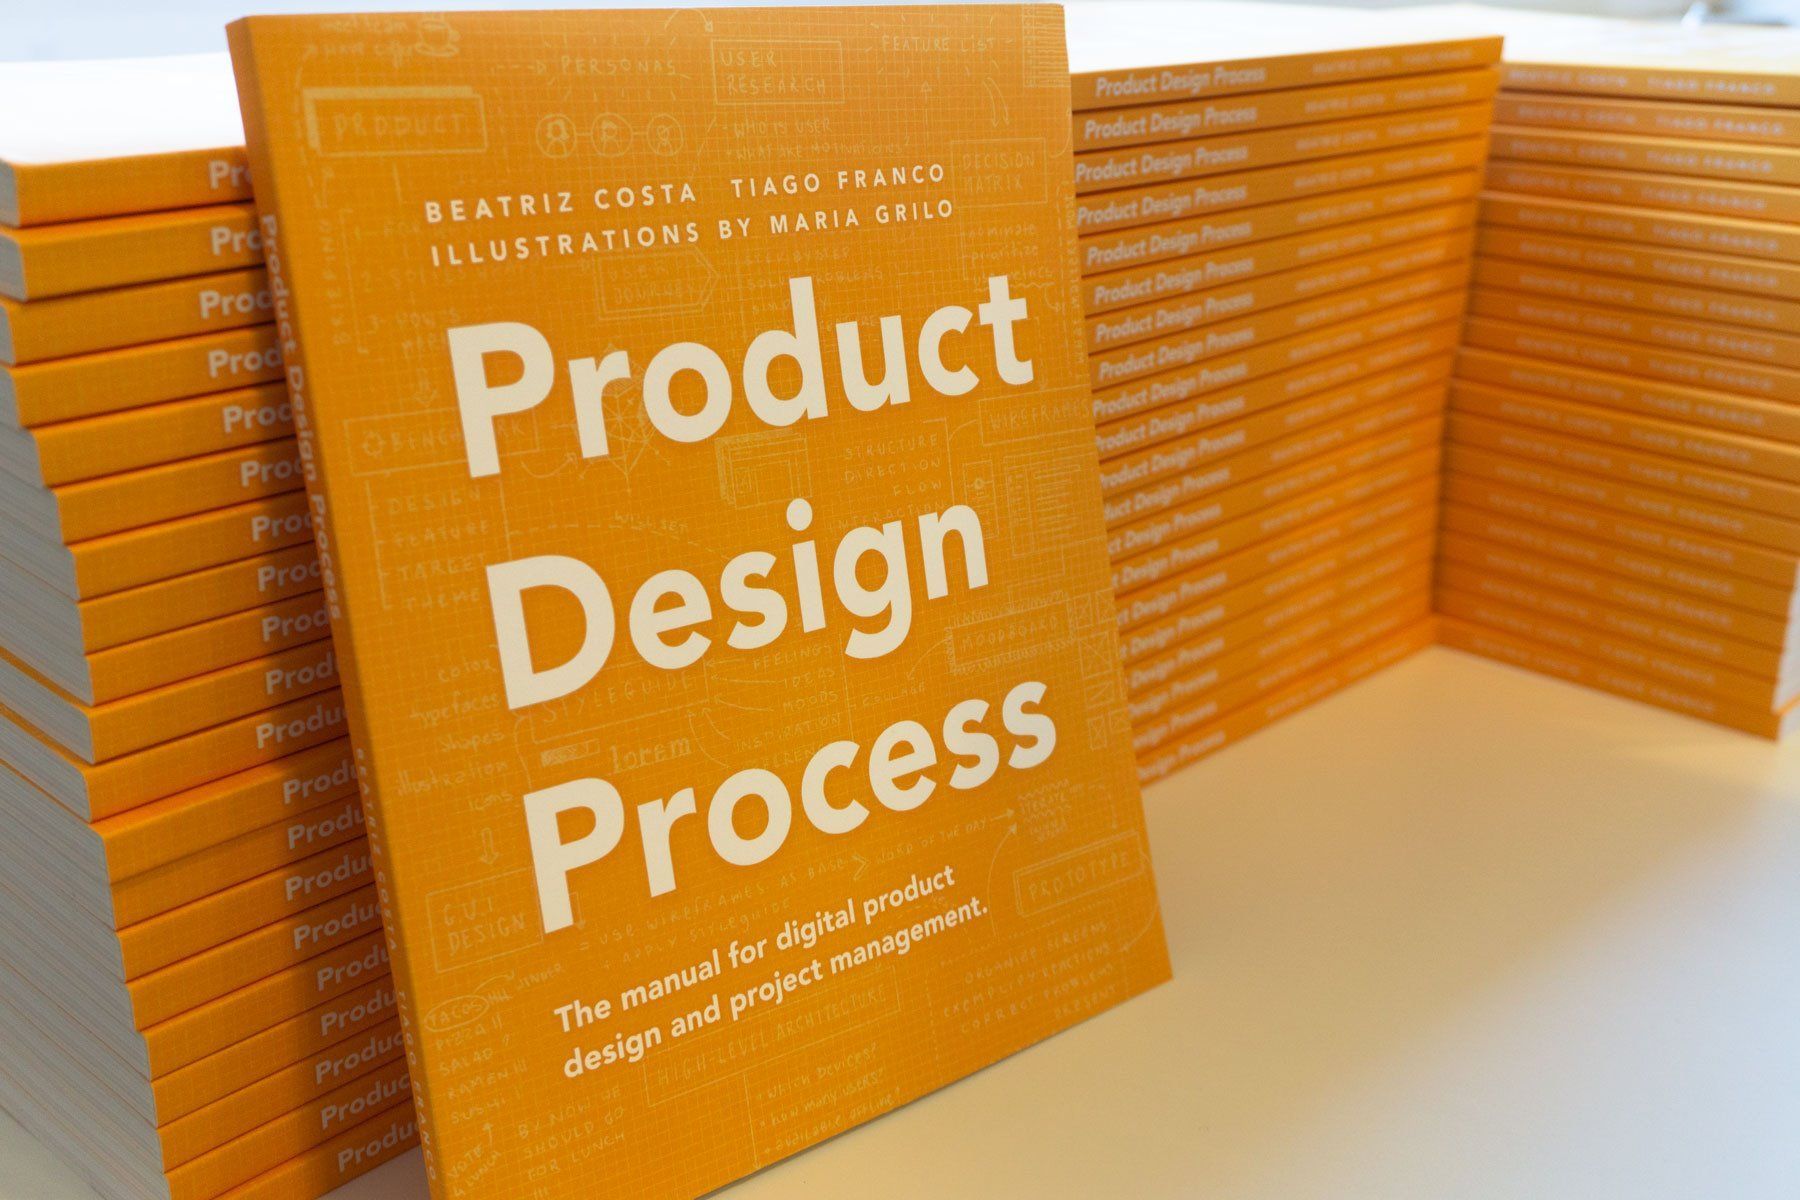 Product Design Process book